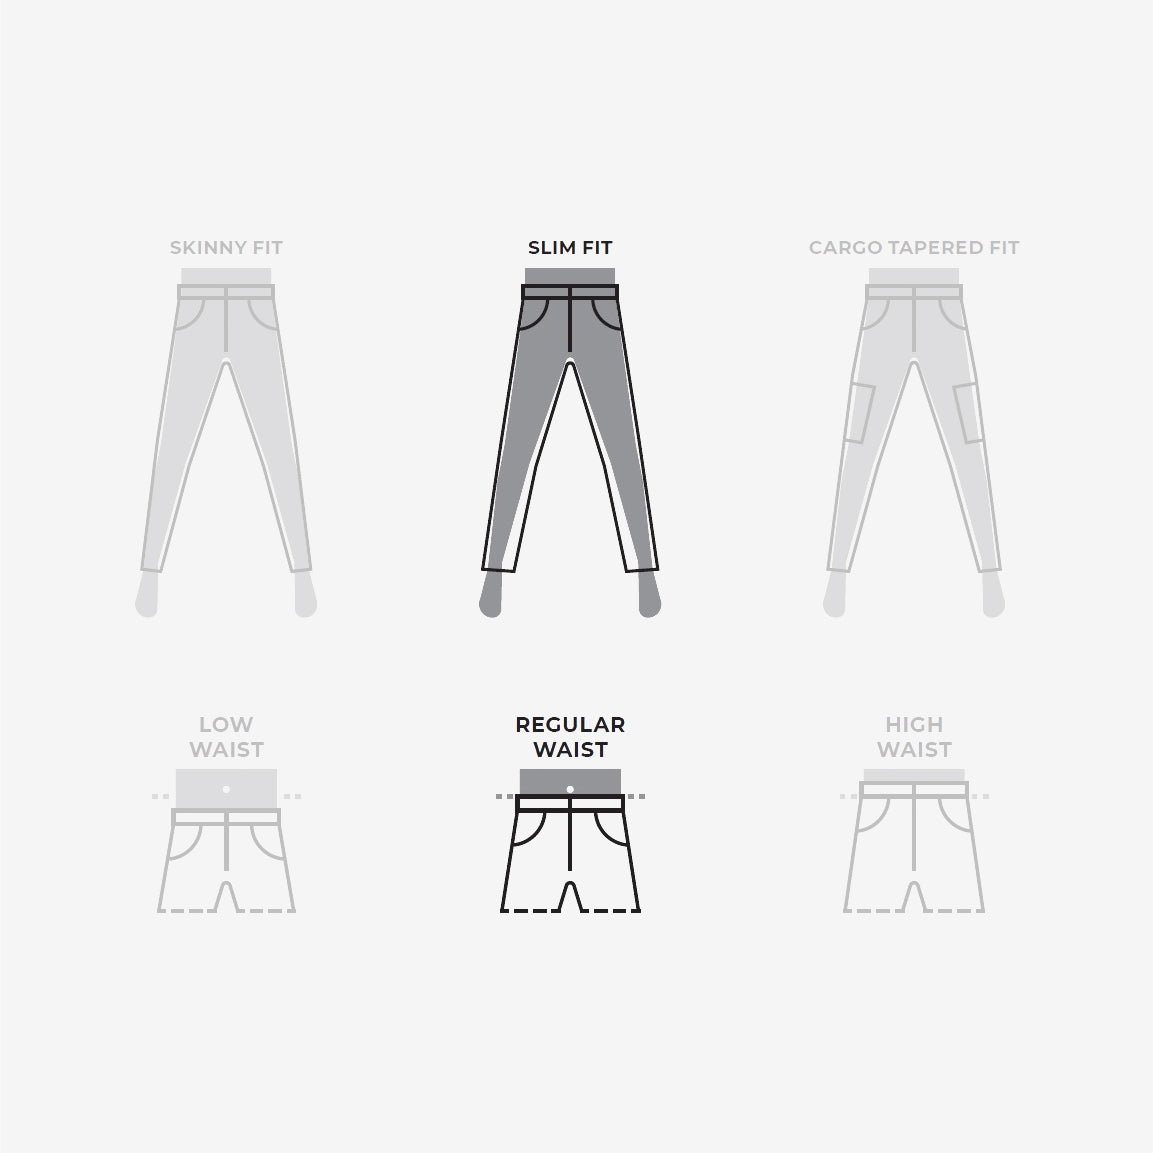 Pando Moto Robby Arm 01 Motorrad-Jeans. Slim Fit Passform, Regular Taillienhöhe